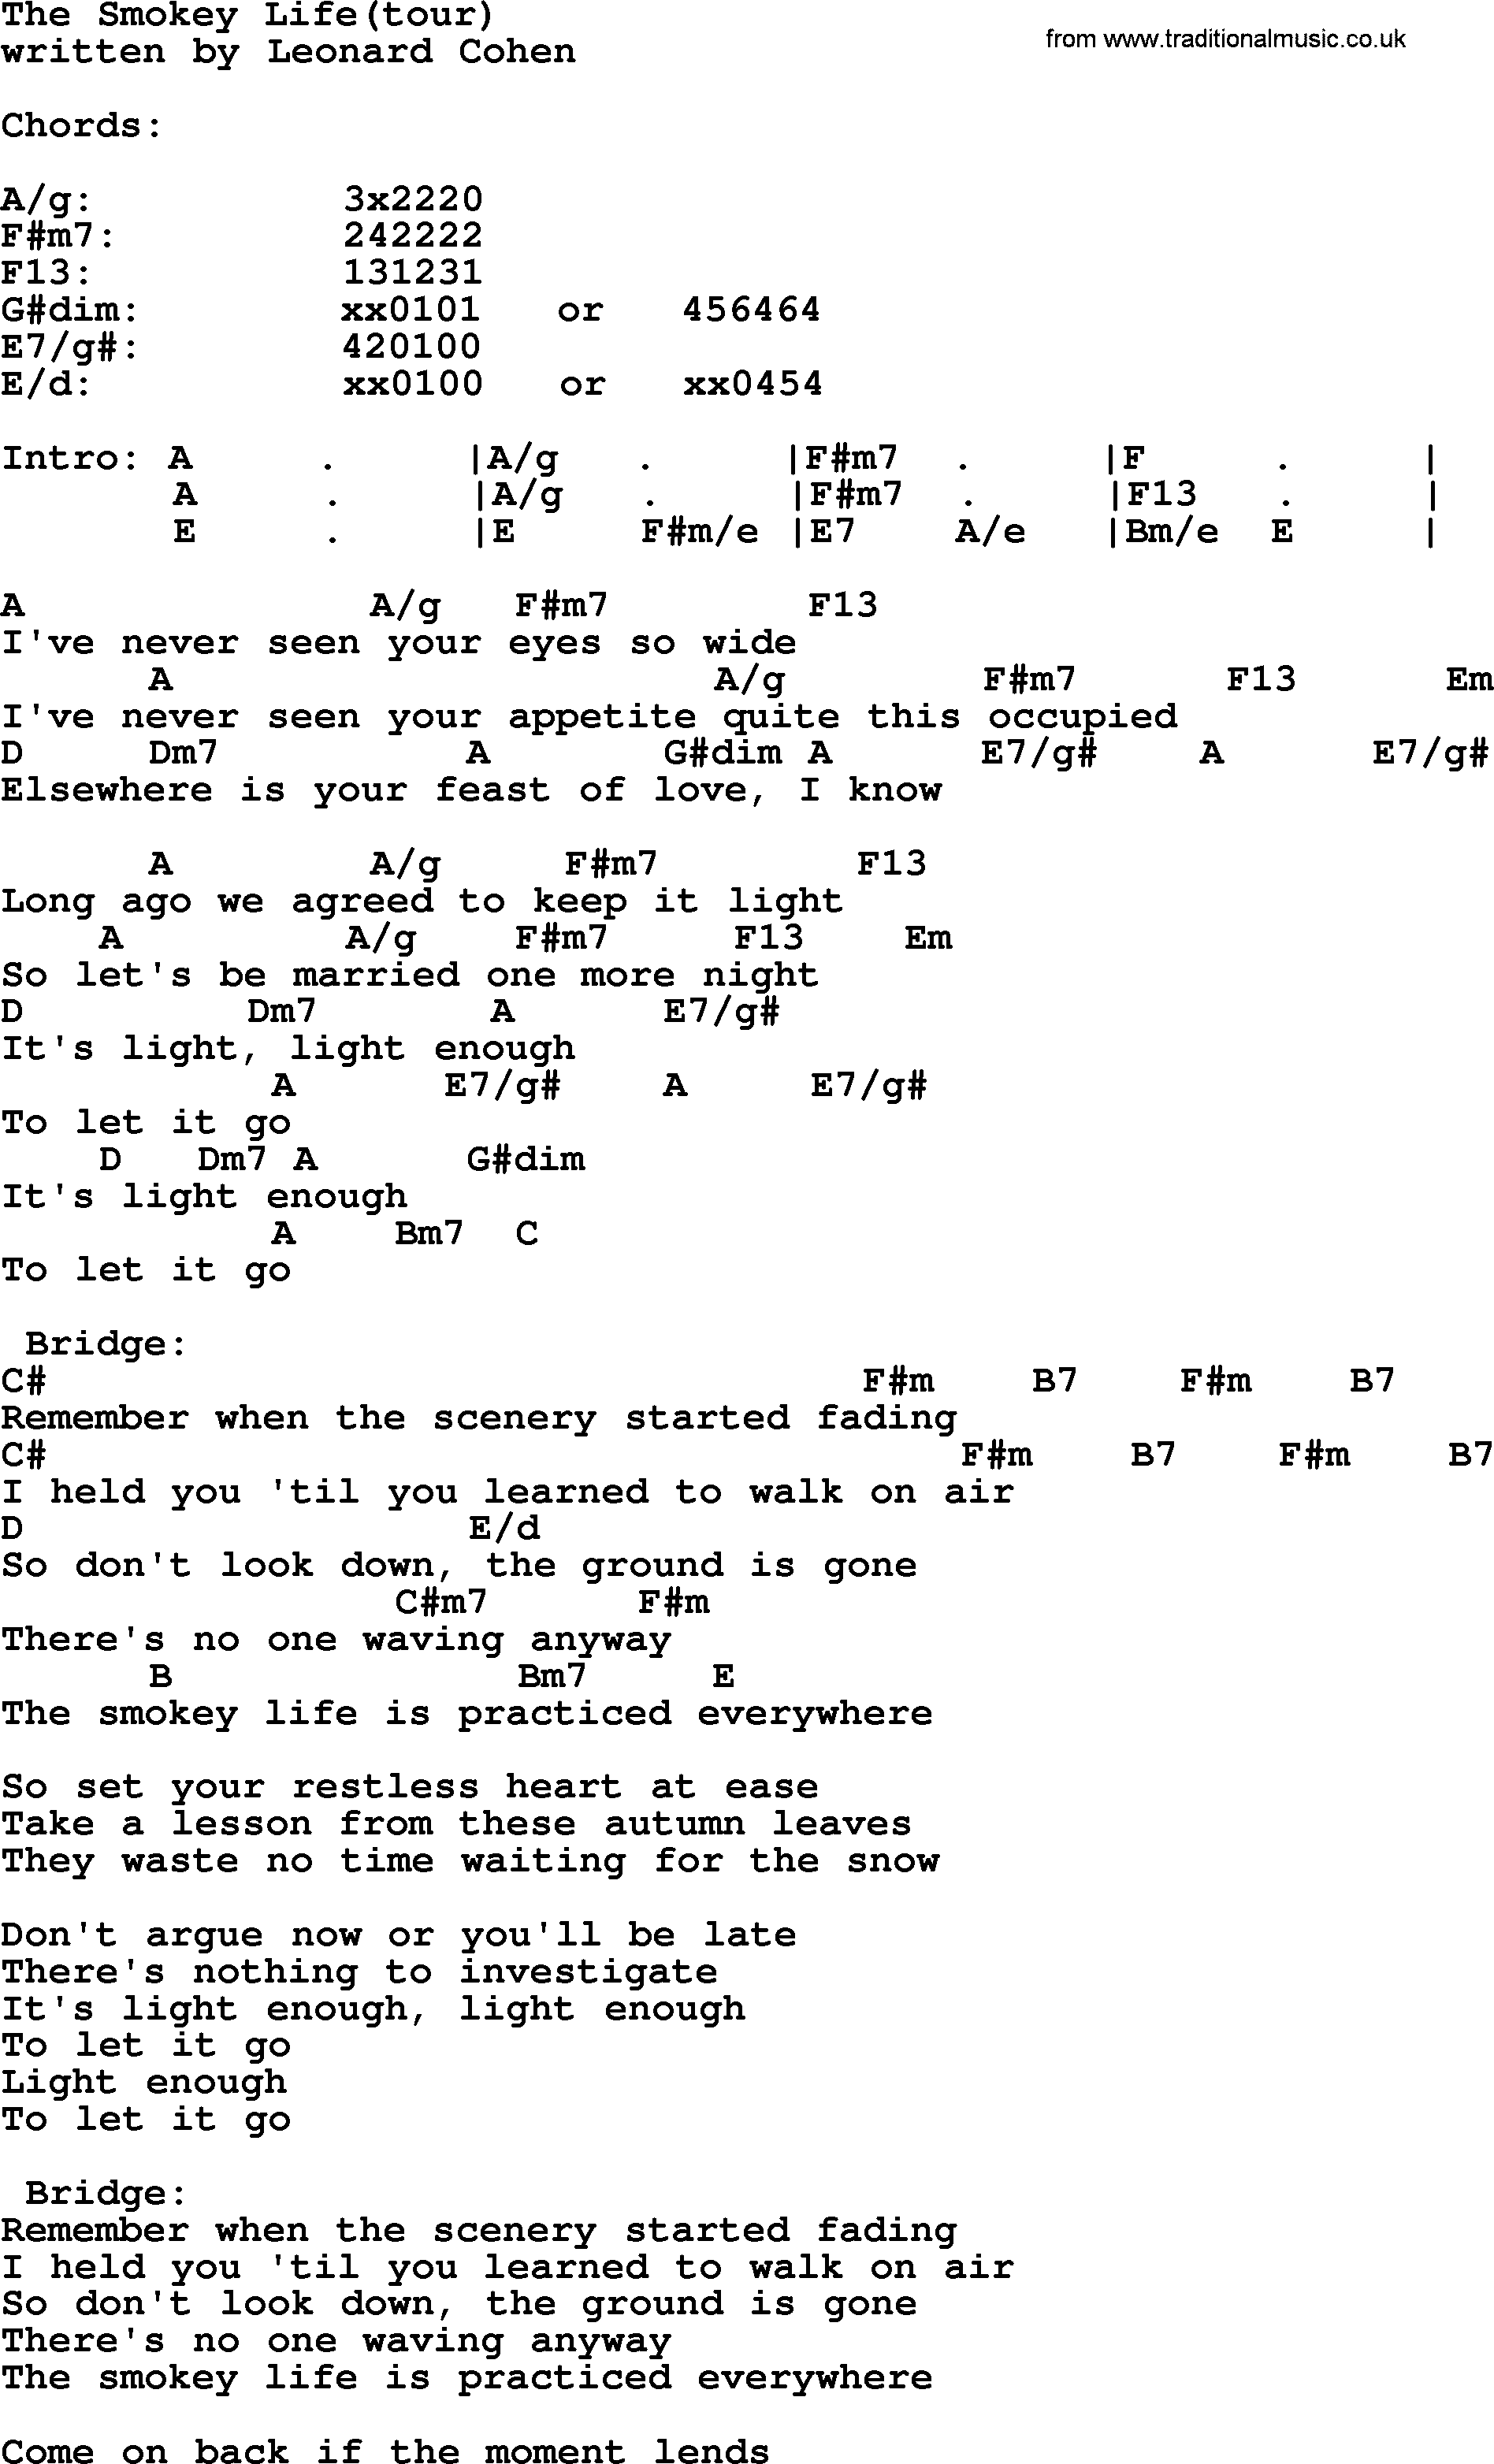 Leonard Cohen song The Smokey Life(tour), lyrics and chords